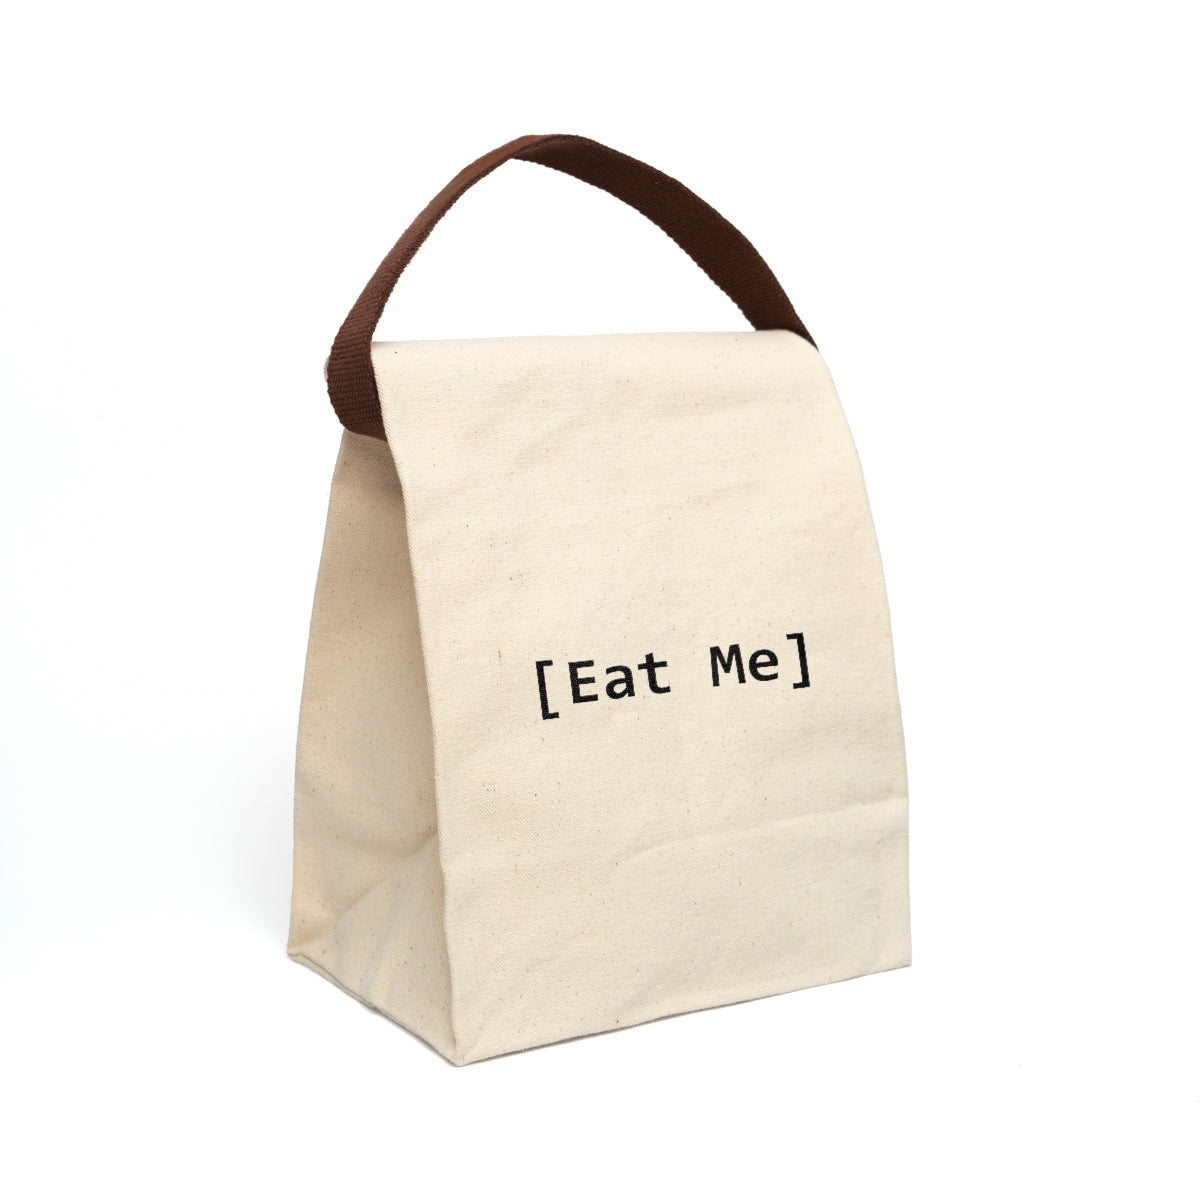 [Eat Me] Lunch Bag